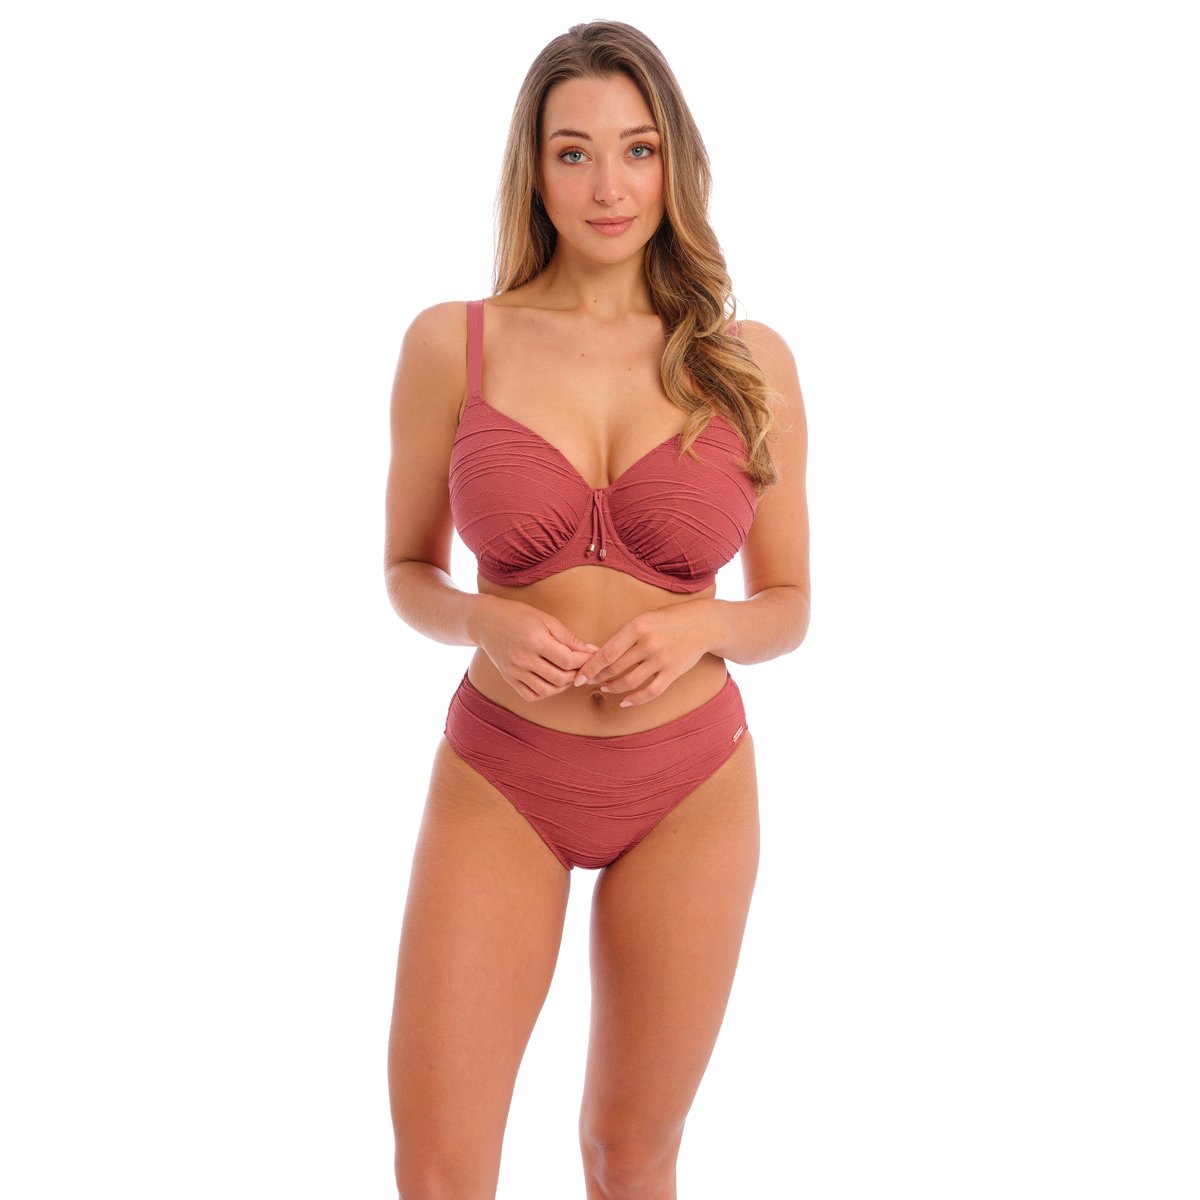 Qcmgmg Bikini Sets for Women Two Piece Strapless Summer Swimwear